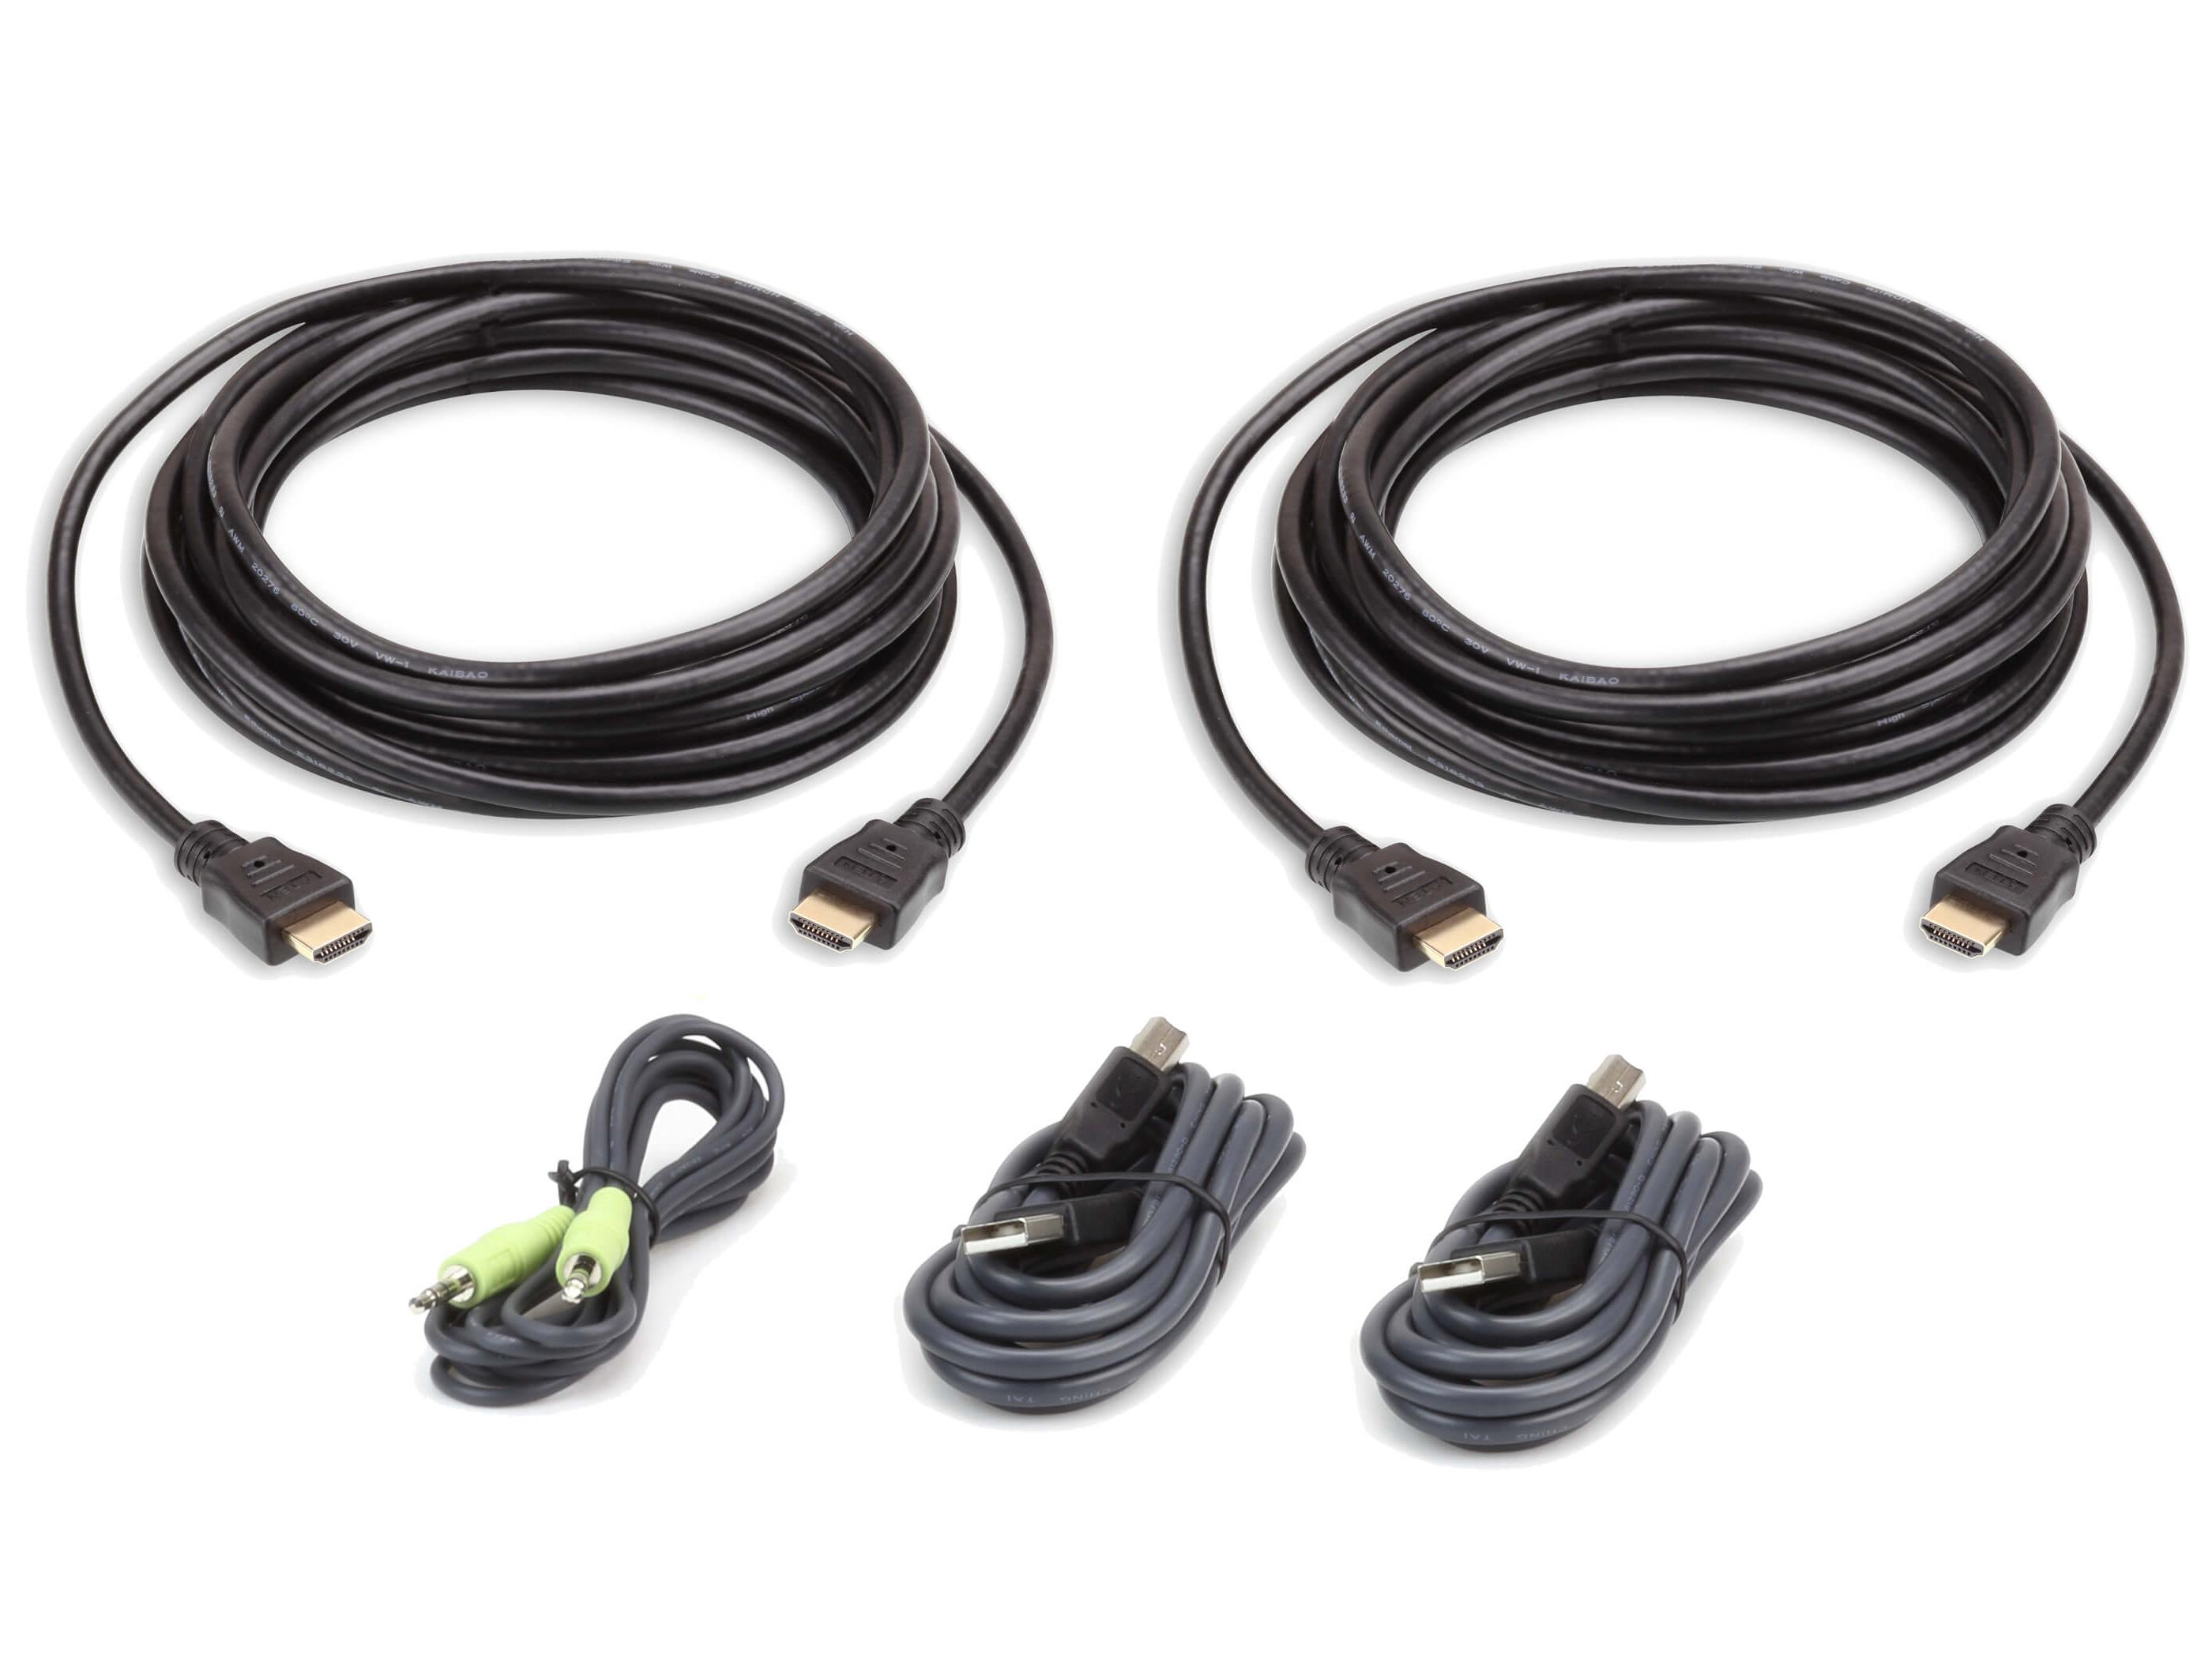 2L7D03UHX5 10ft Dual Display HDMI Secure KVM Cable Kit by Aten